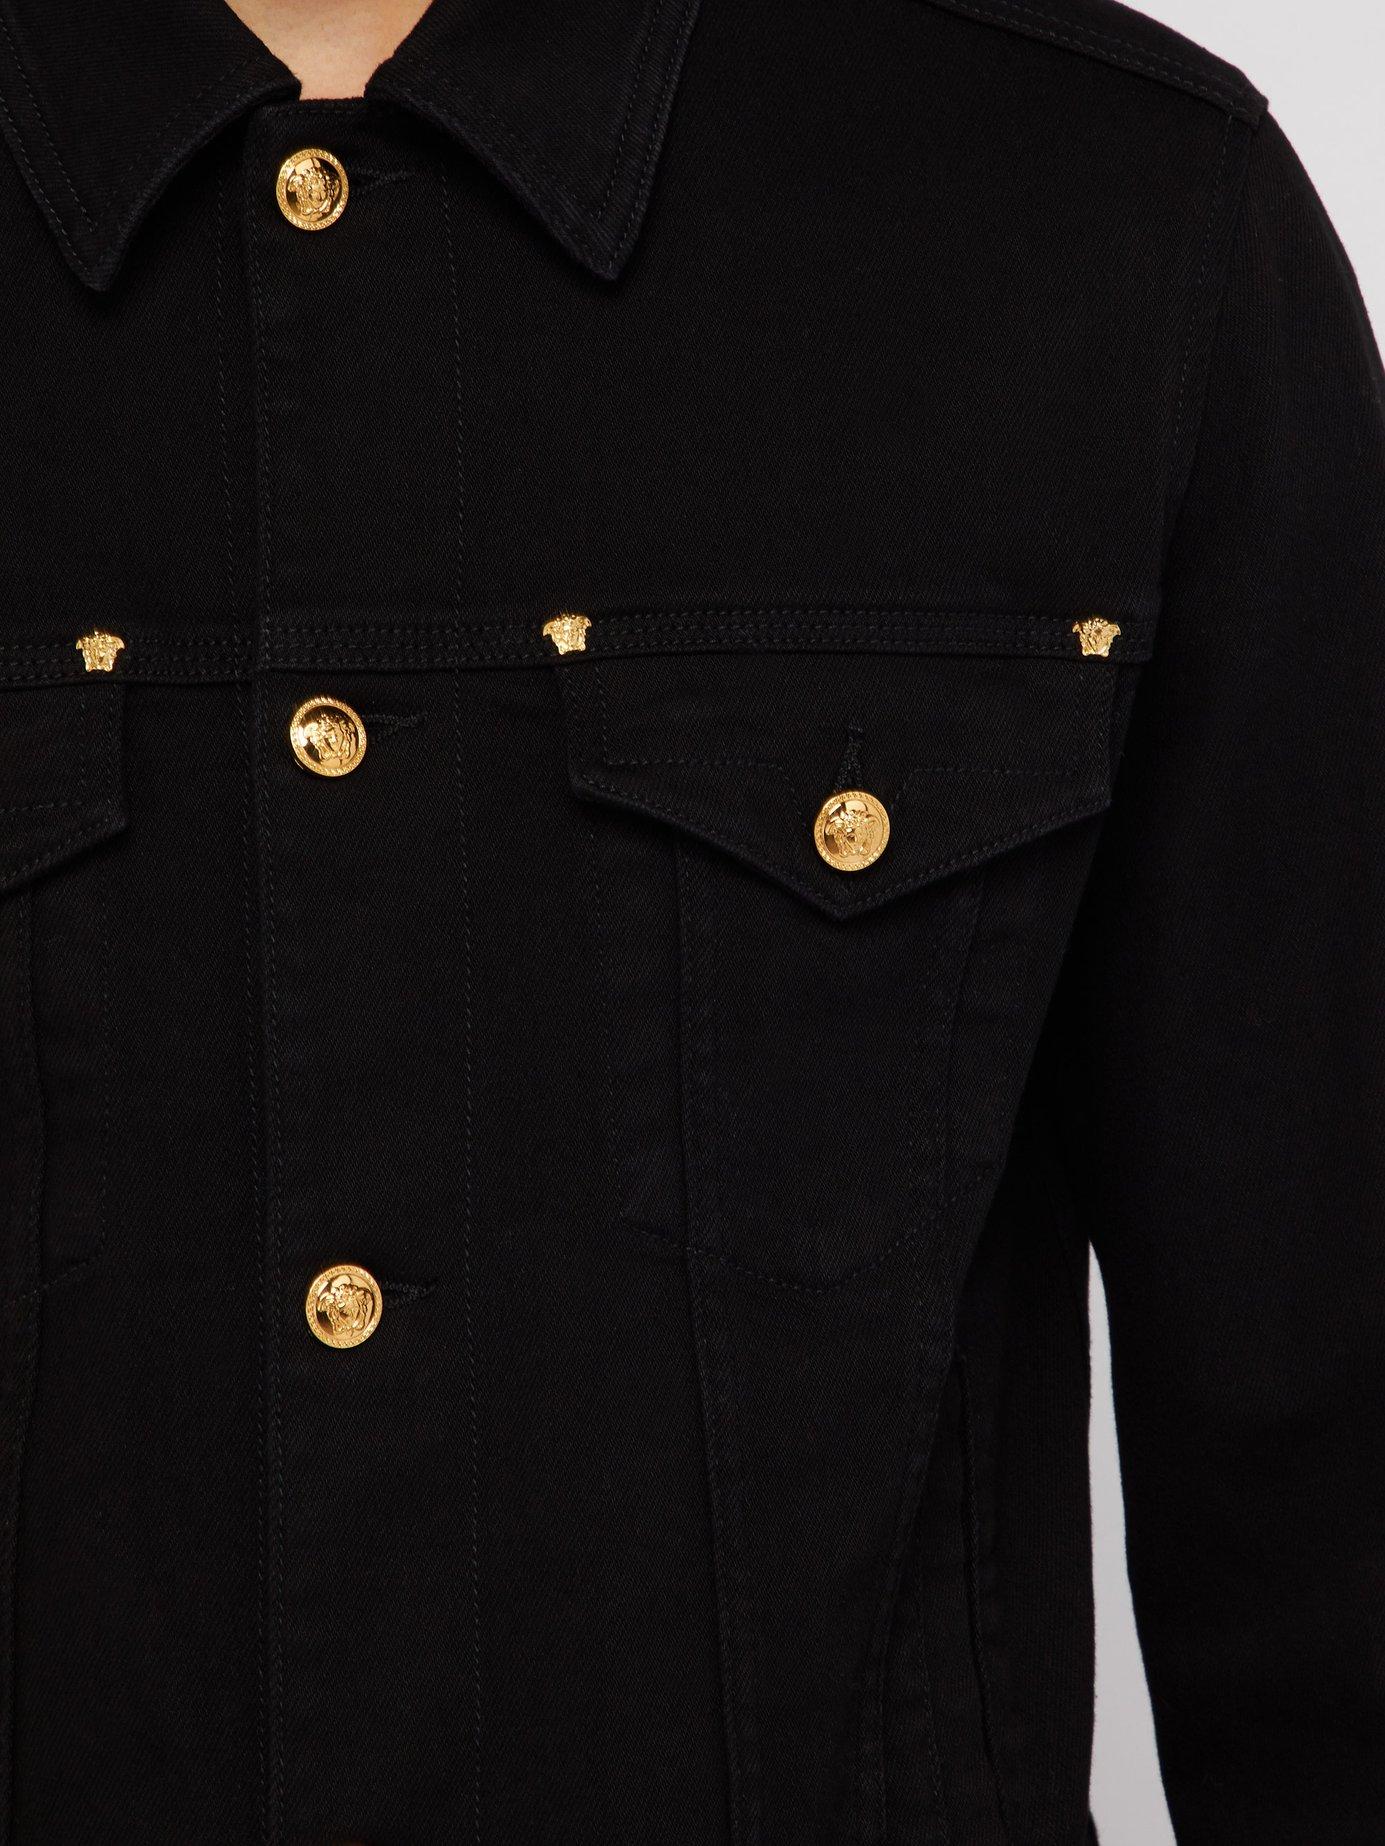 Versace Medusa Button Denim Jacket in Black for Men | Lyst